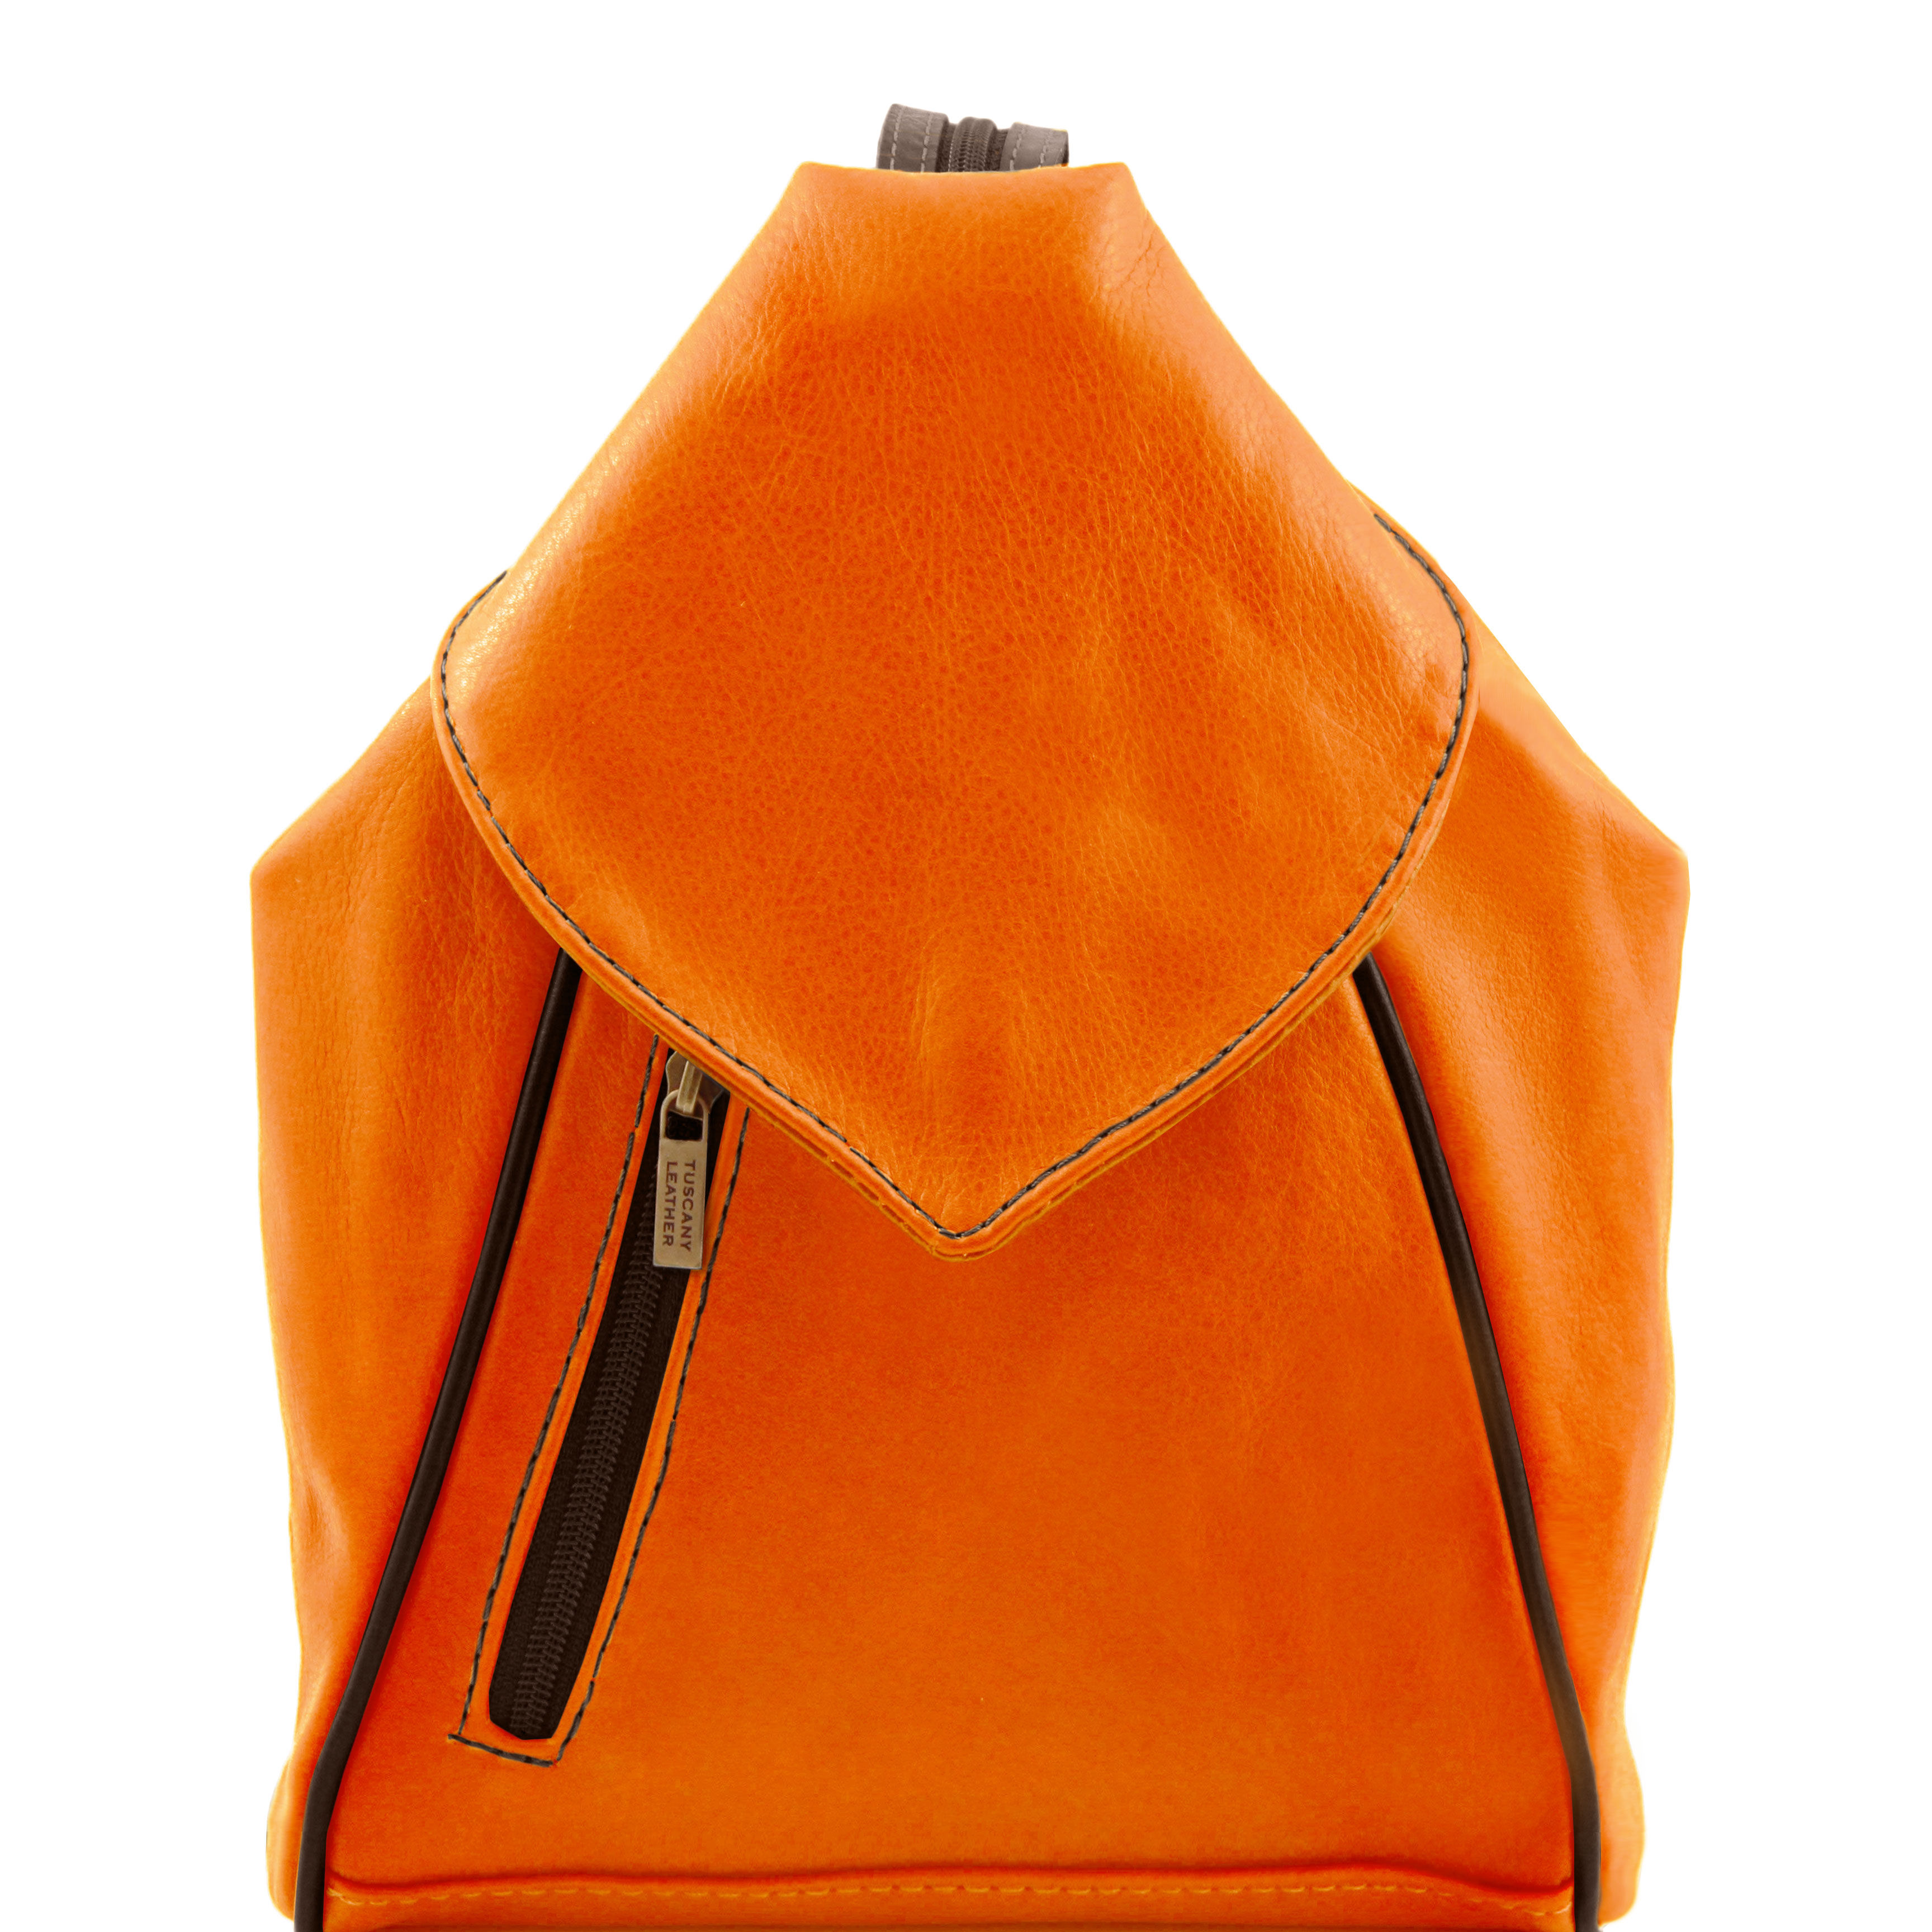 Rucsac Tuscany Leather din piele portocaliu Delhi